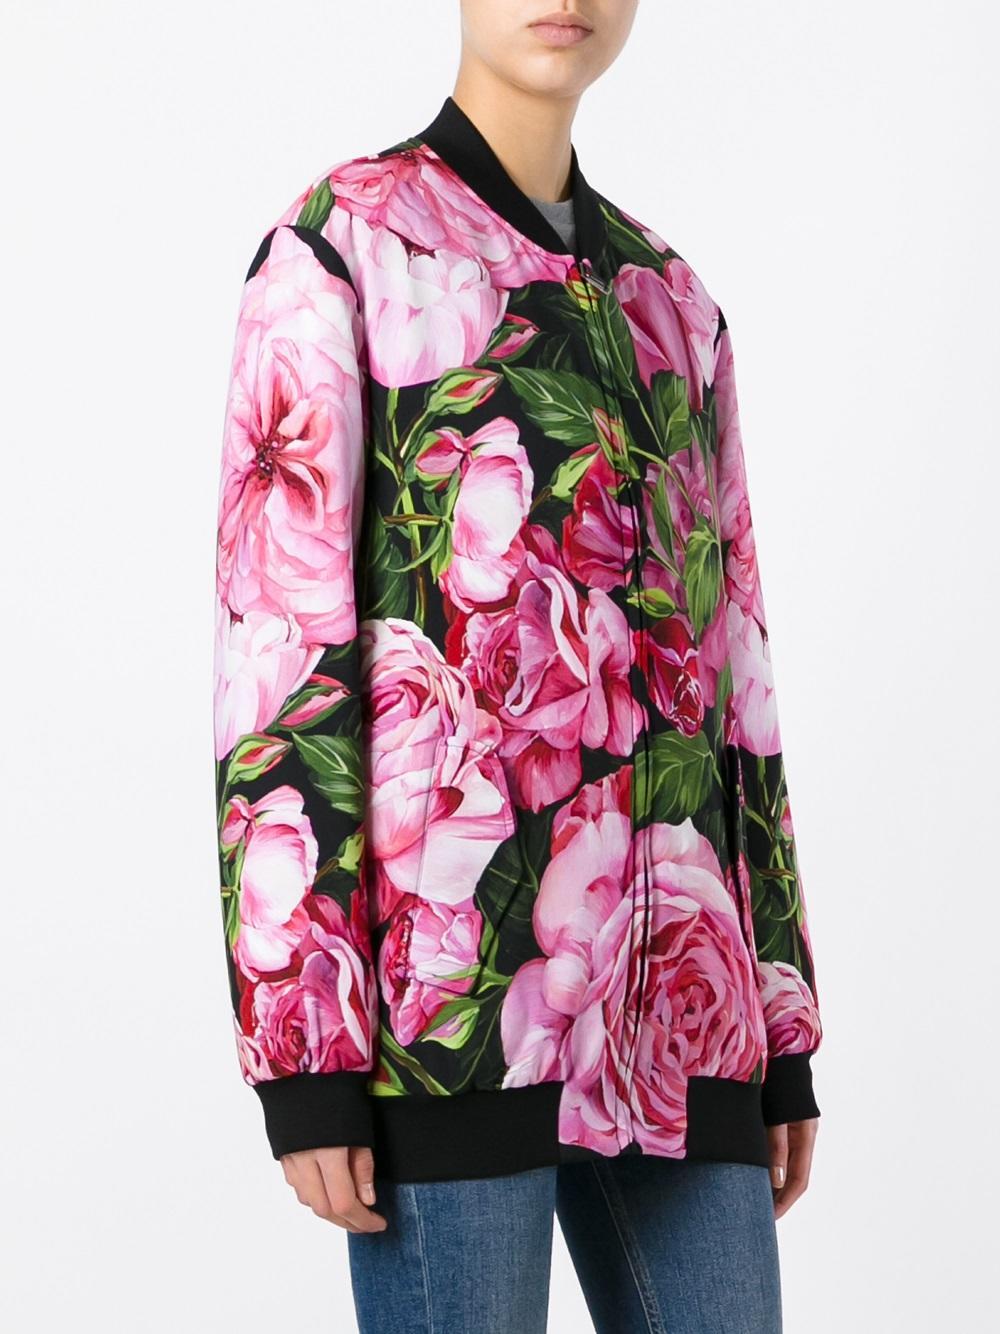 Lyst - Dolce & Gabbana Rose Print Bomber Jacket in Pink